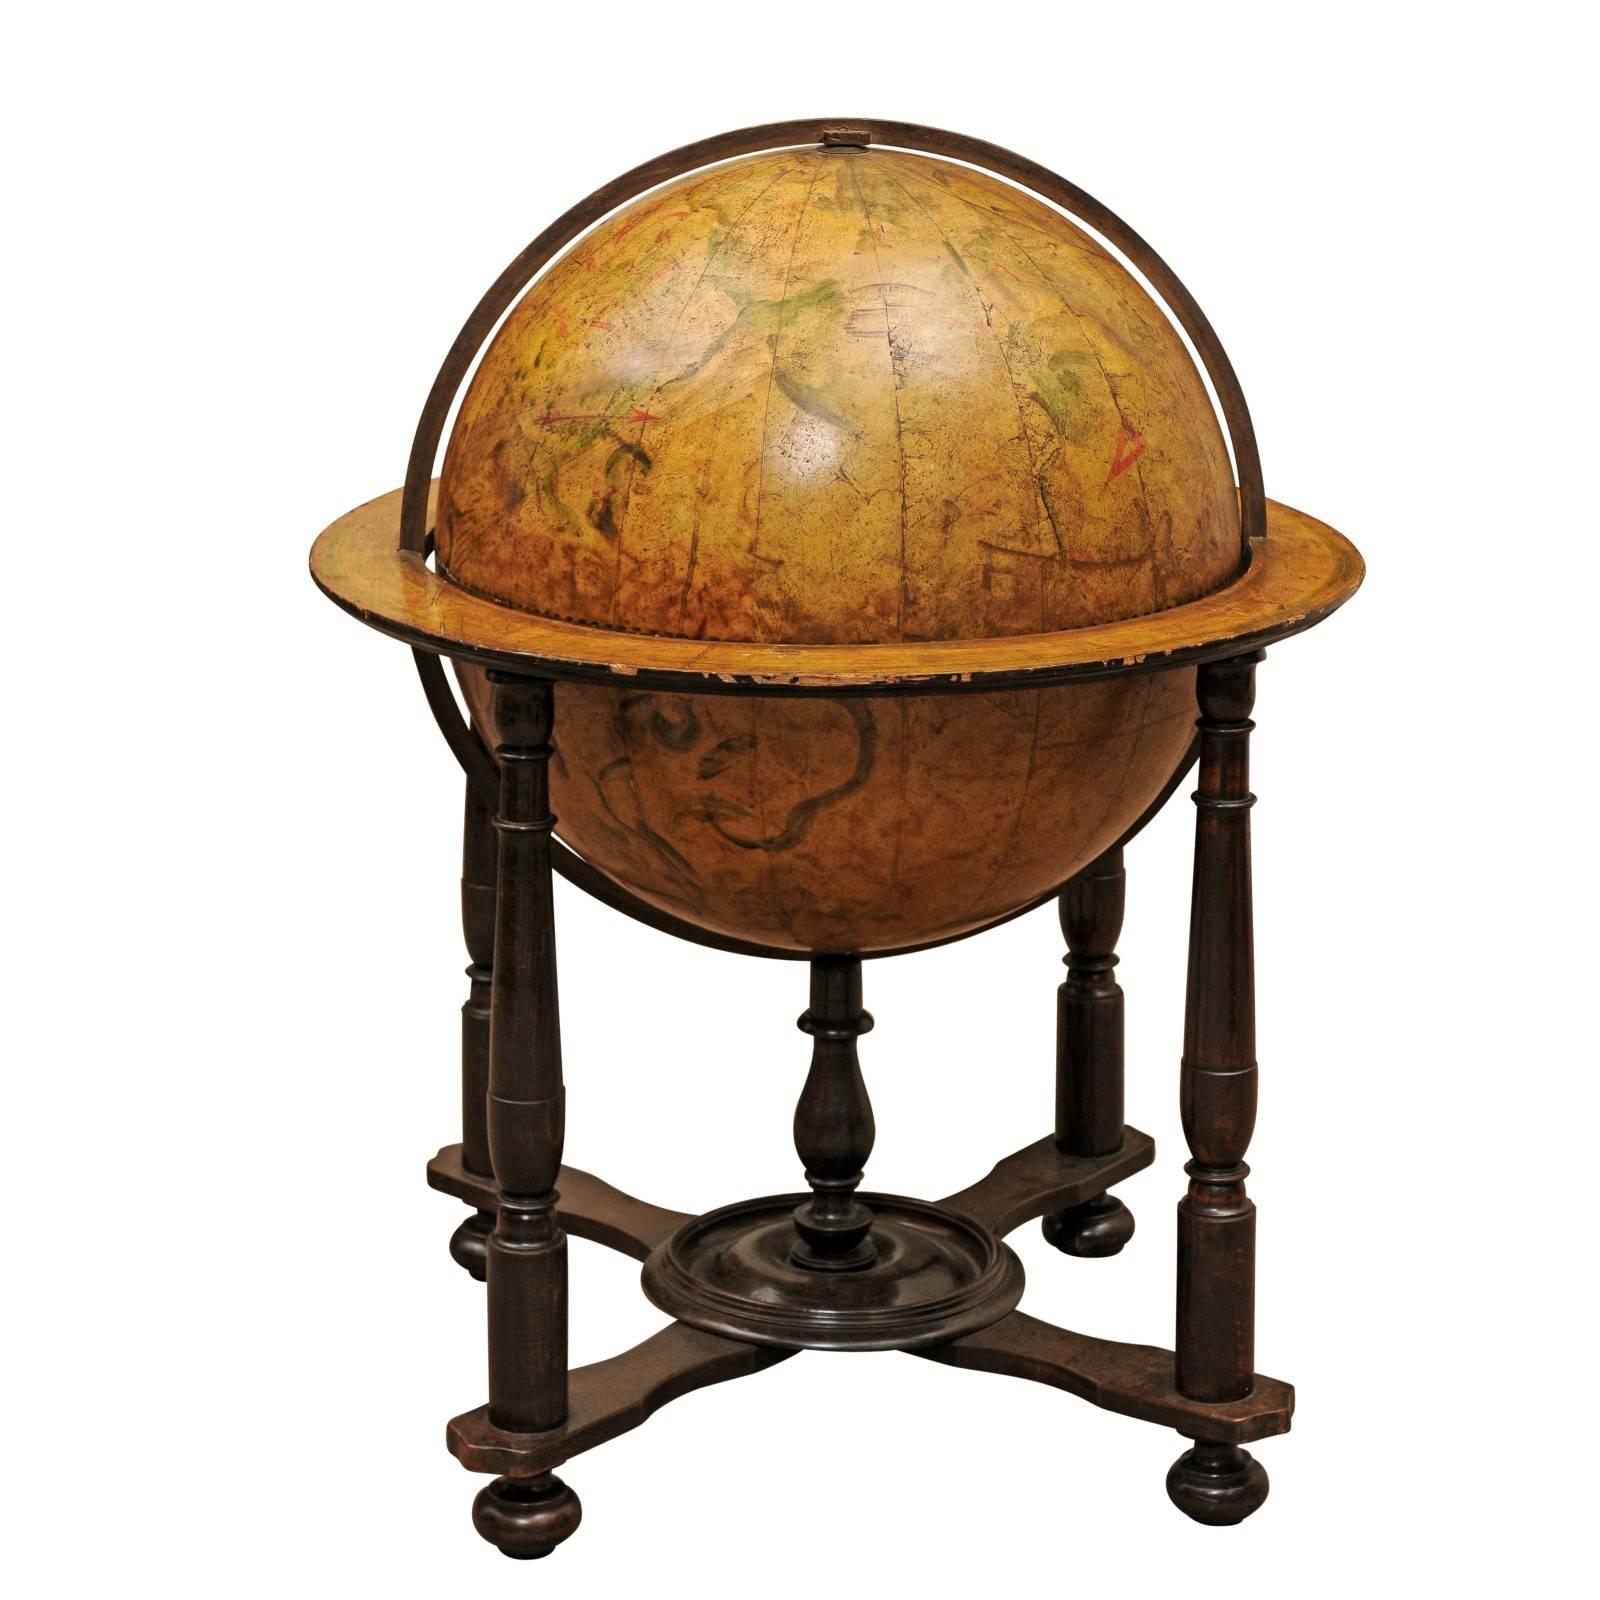 19th Century Italian Painted Wood Celestial Globe on Later Turned Leg Stand